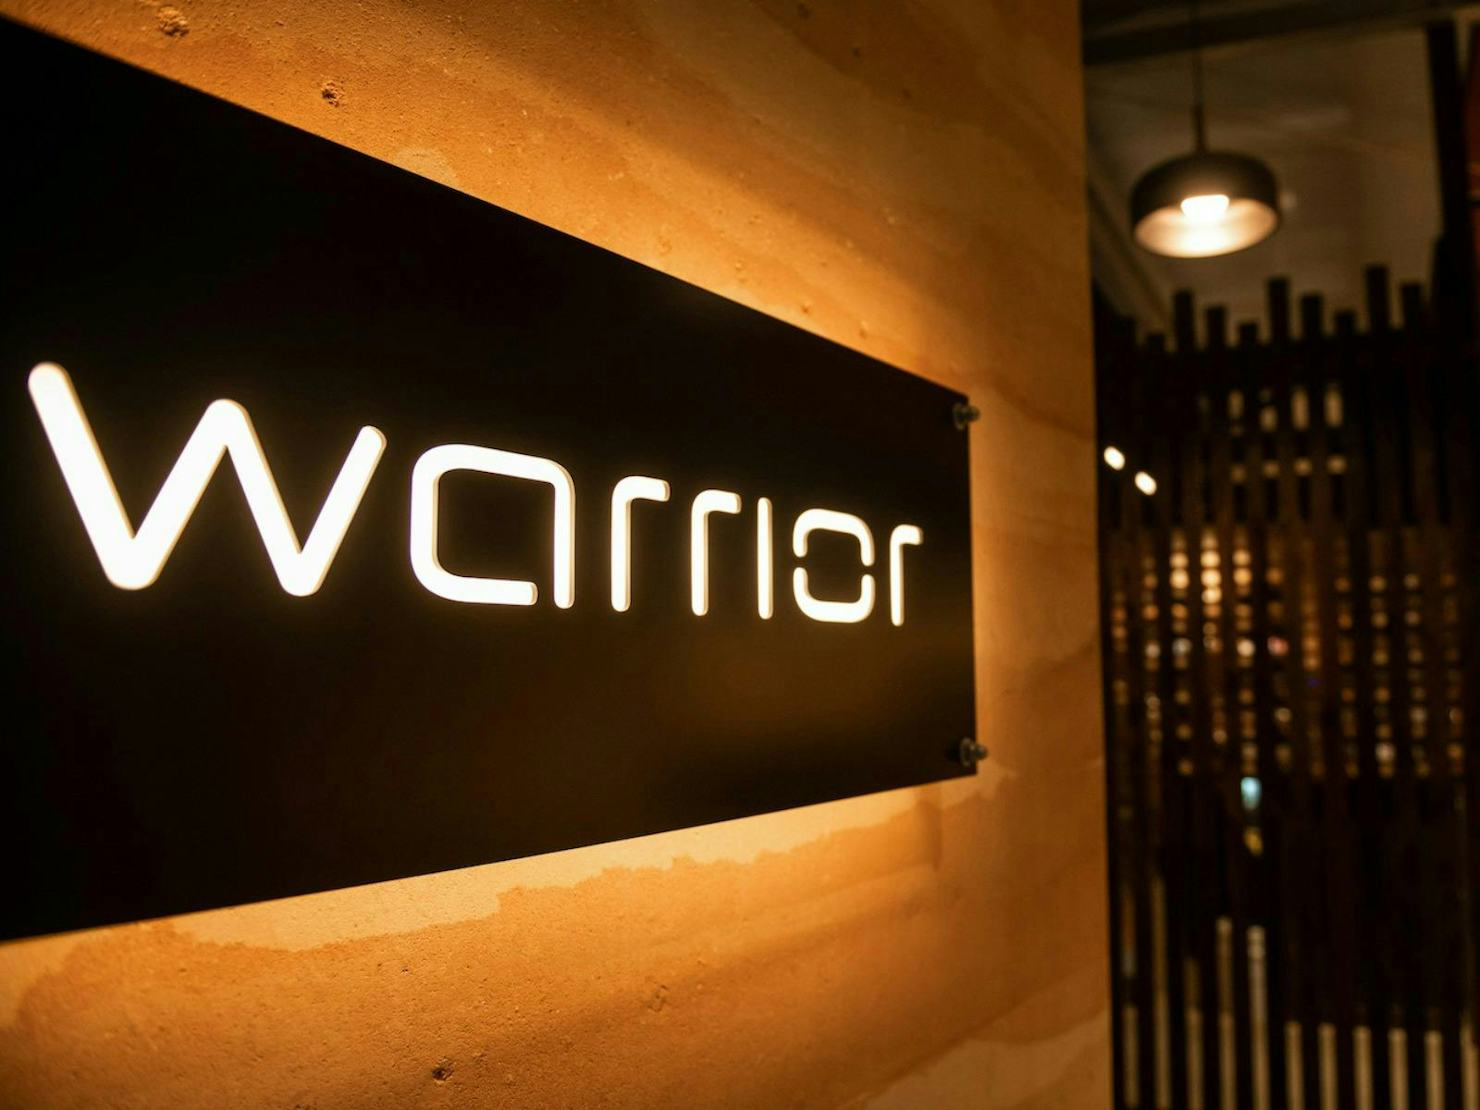 Warrior Restaurant & Bar